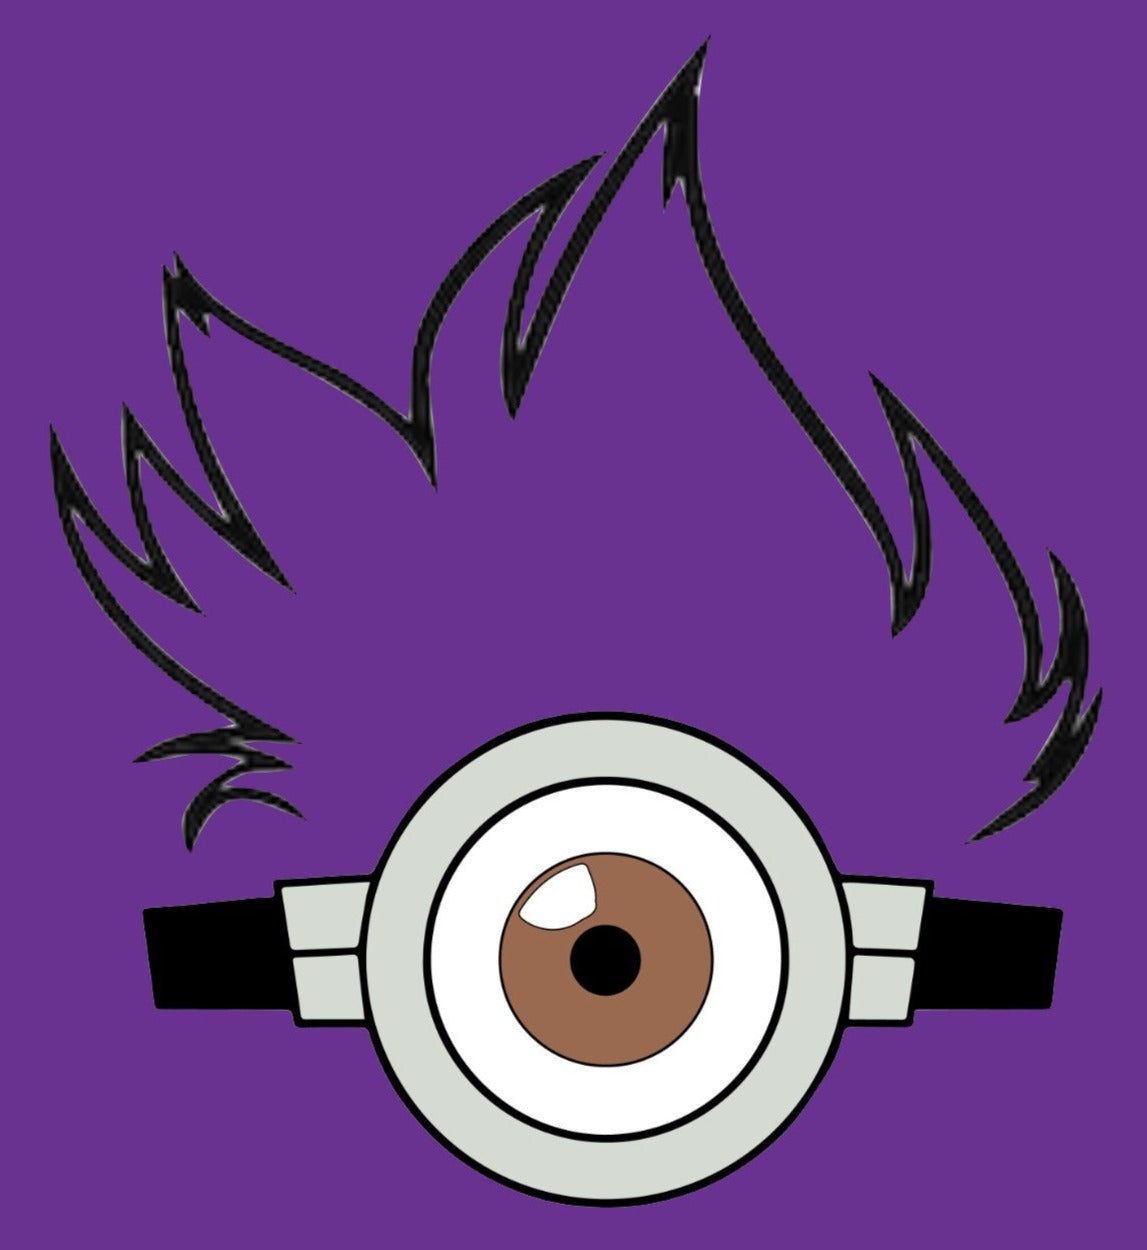 purple minion face